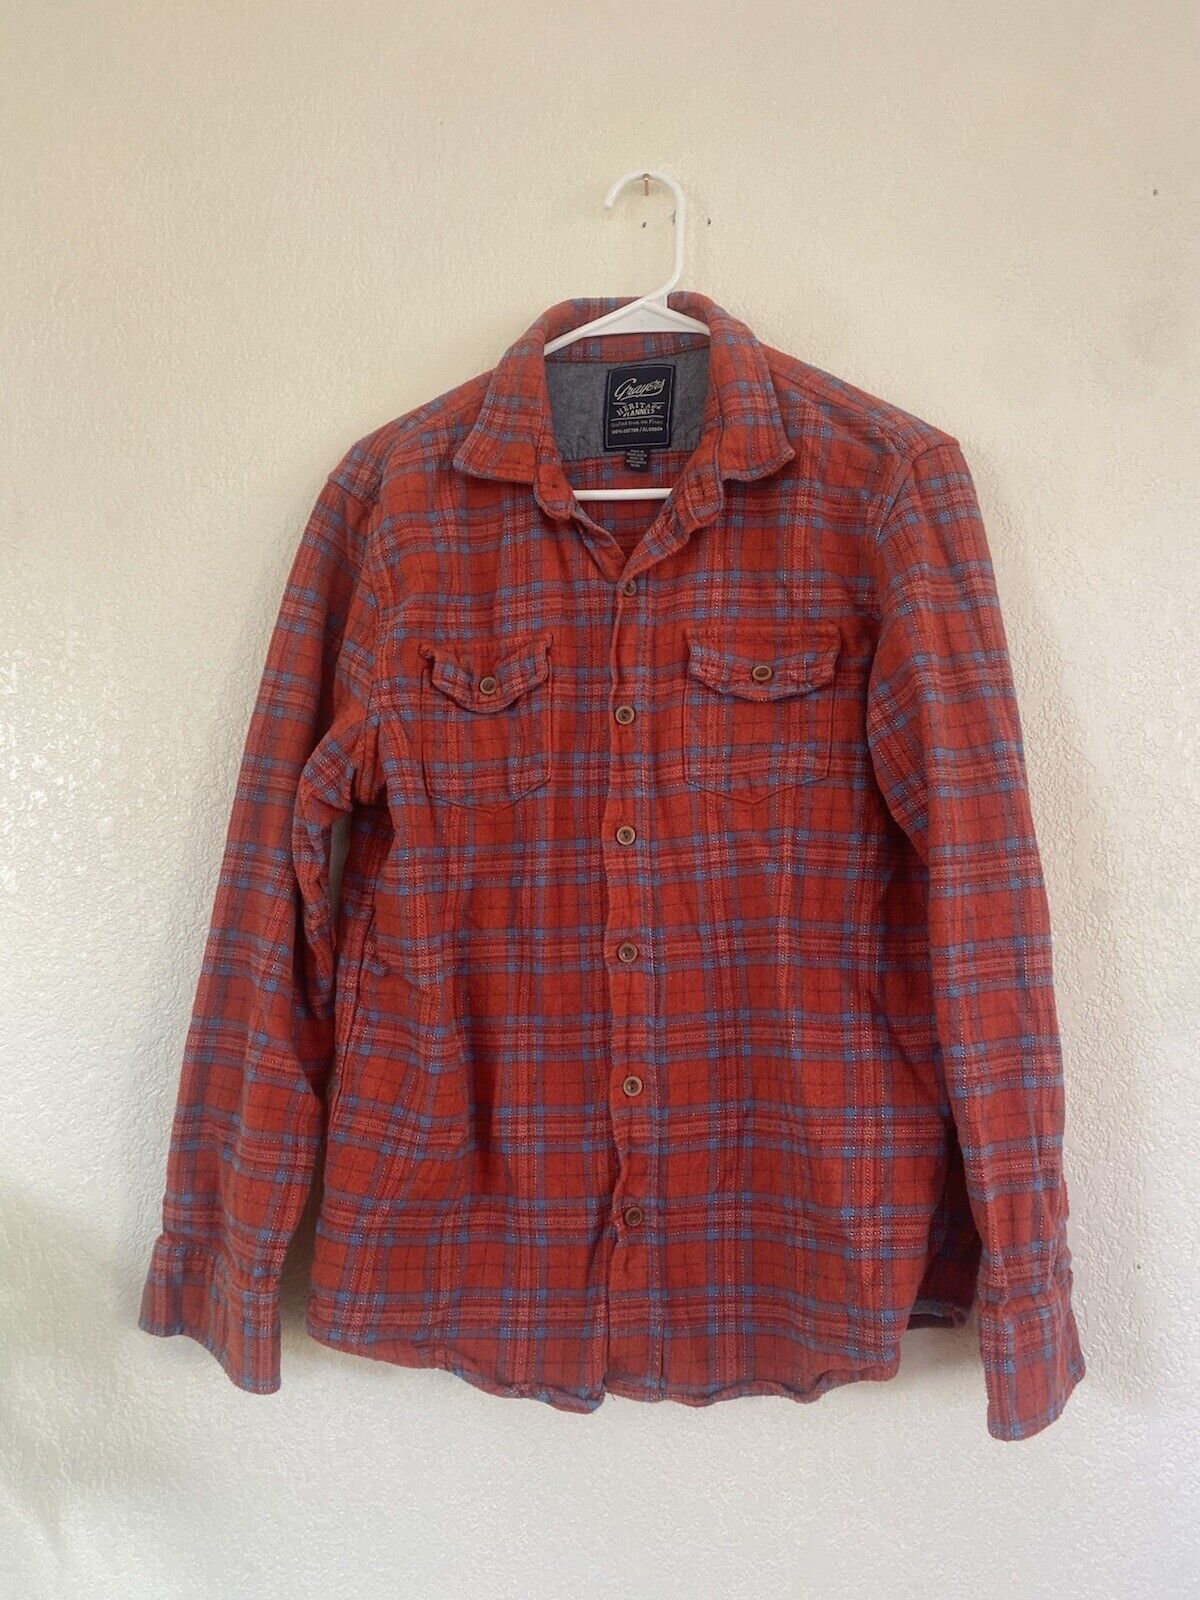 Red Plaid Flannel Shirt - Grayers - Size Medium # 1947